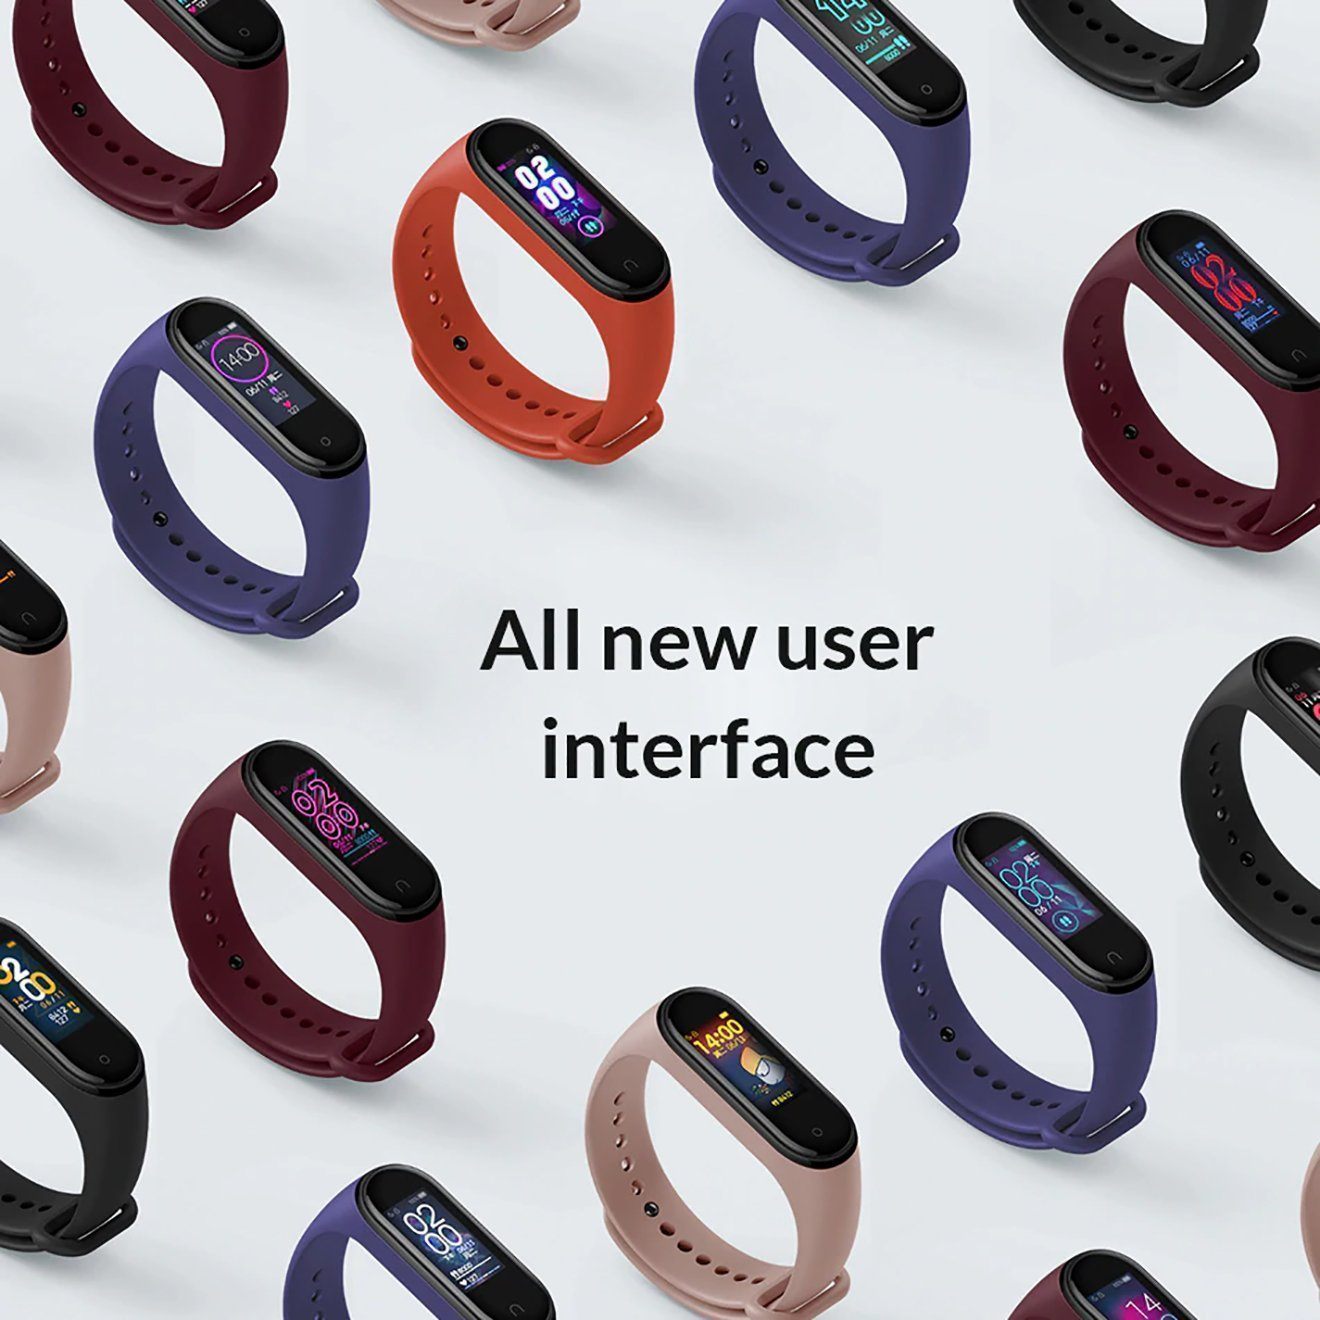 Xiaomi Mi Band 4 Smart Watch Wrist Band